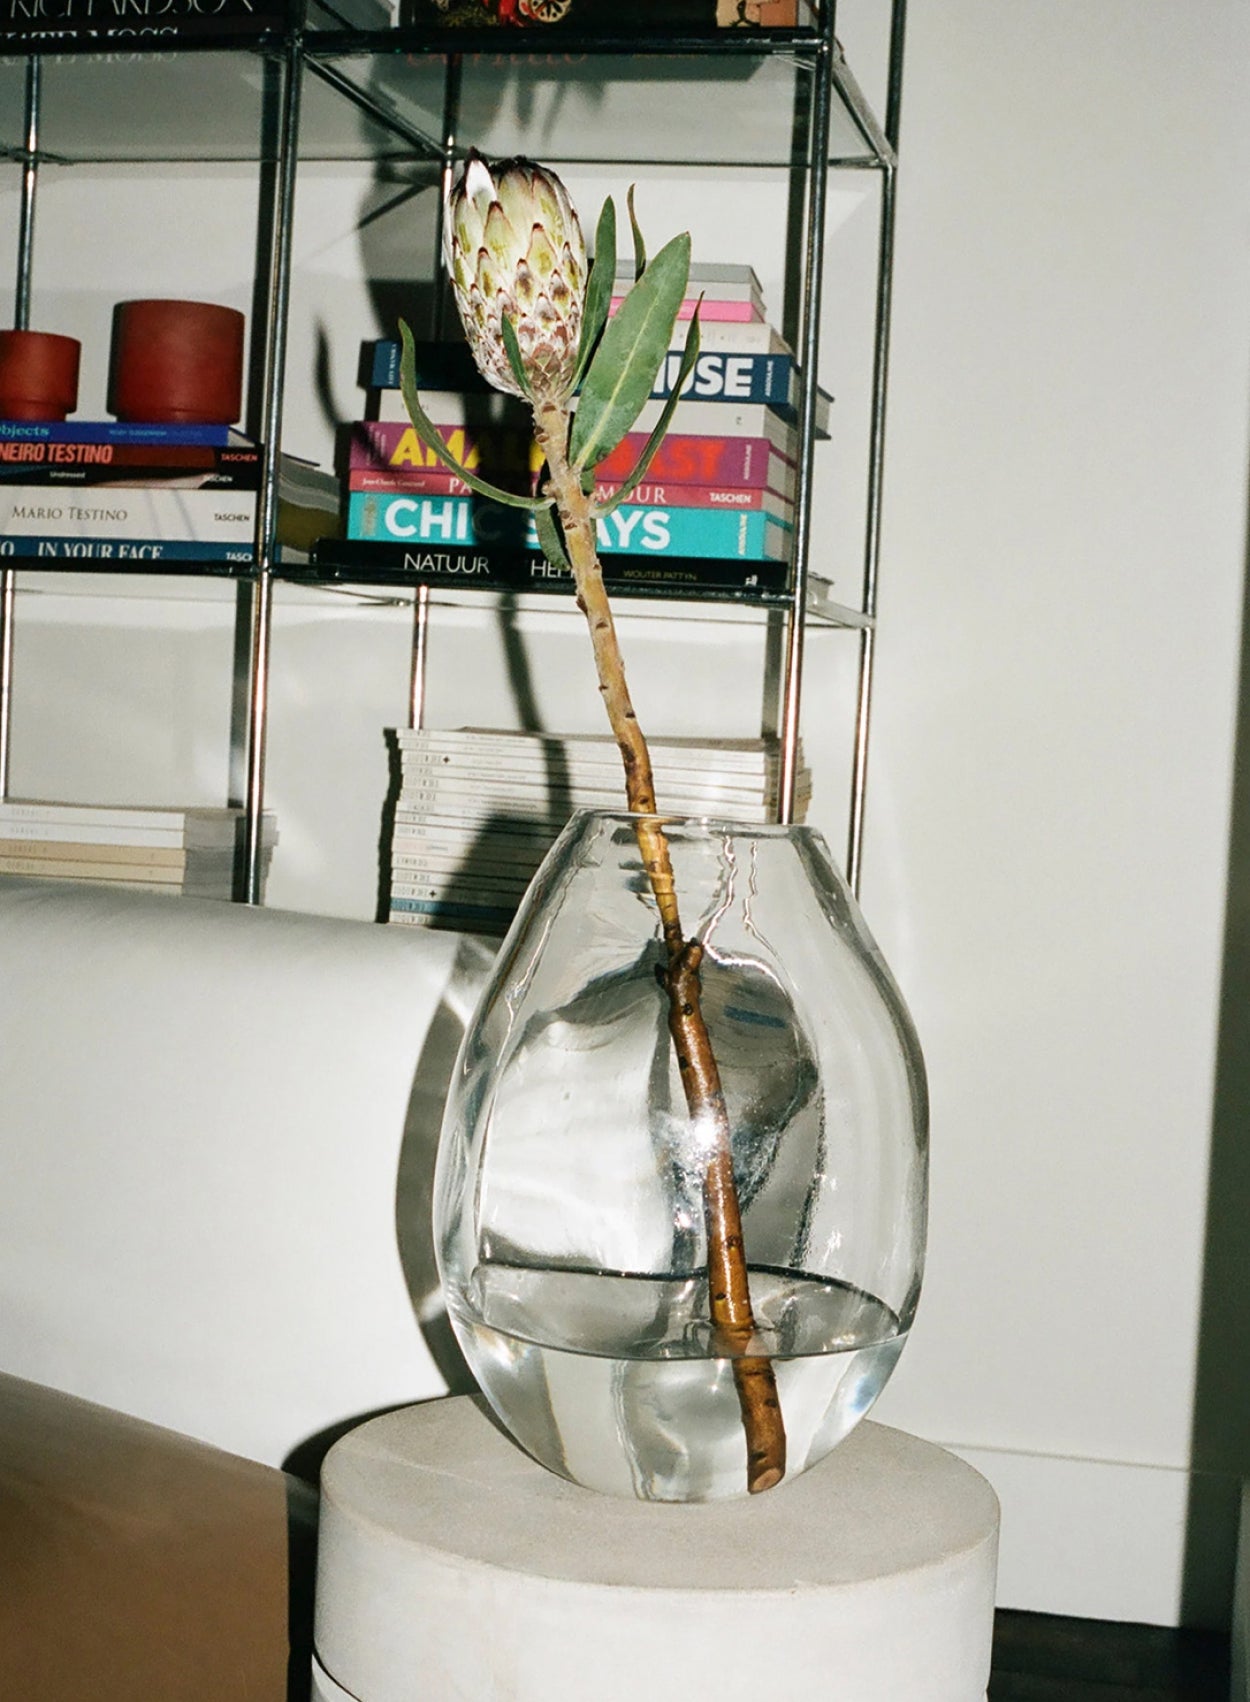 Addled Vase Clear, Large, Nienke Sikkema - RiRa Objects